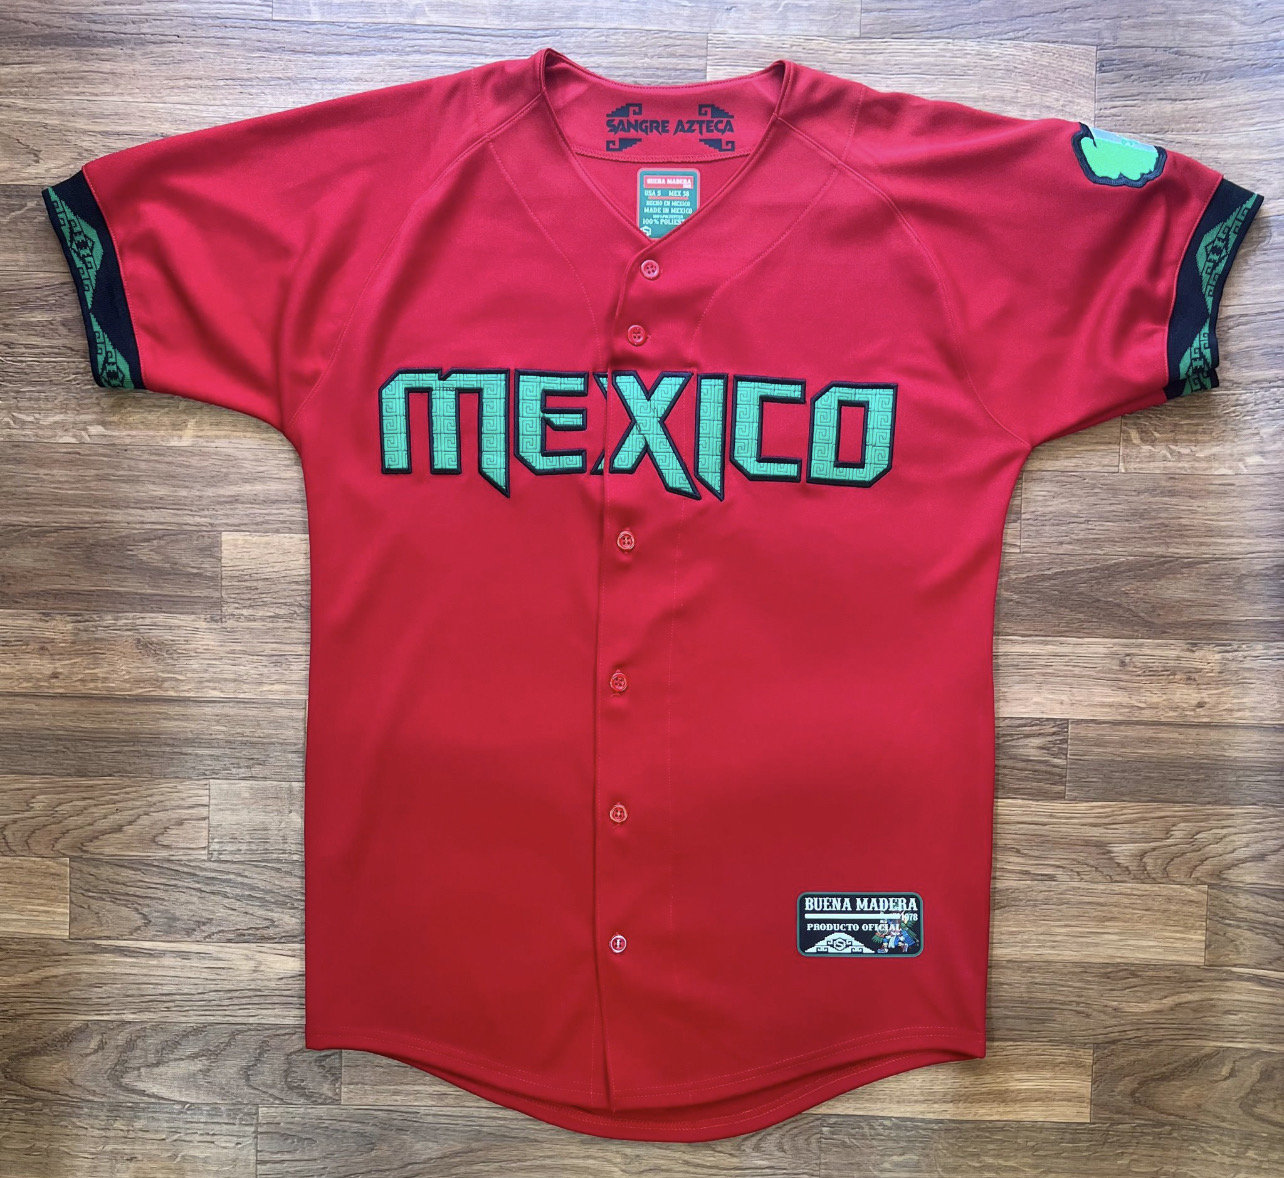 Custom Name Mexico Baseball Red 2023 World Baseball Classic Replica Baseball  Jersey